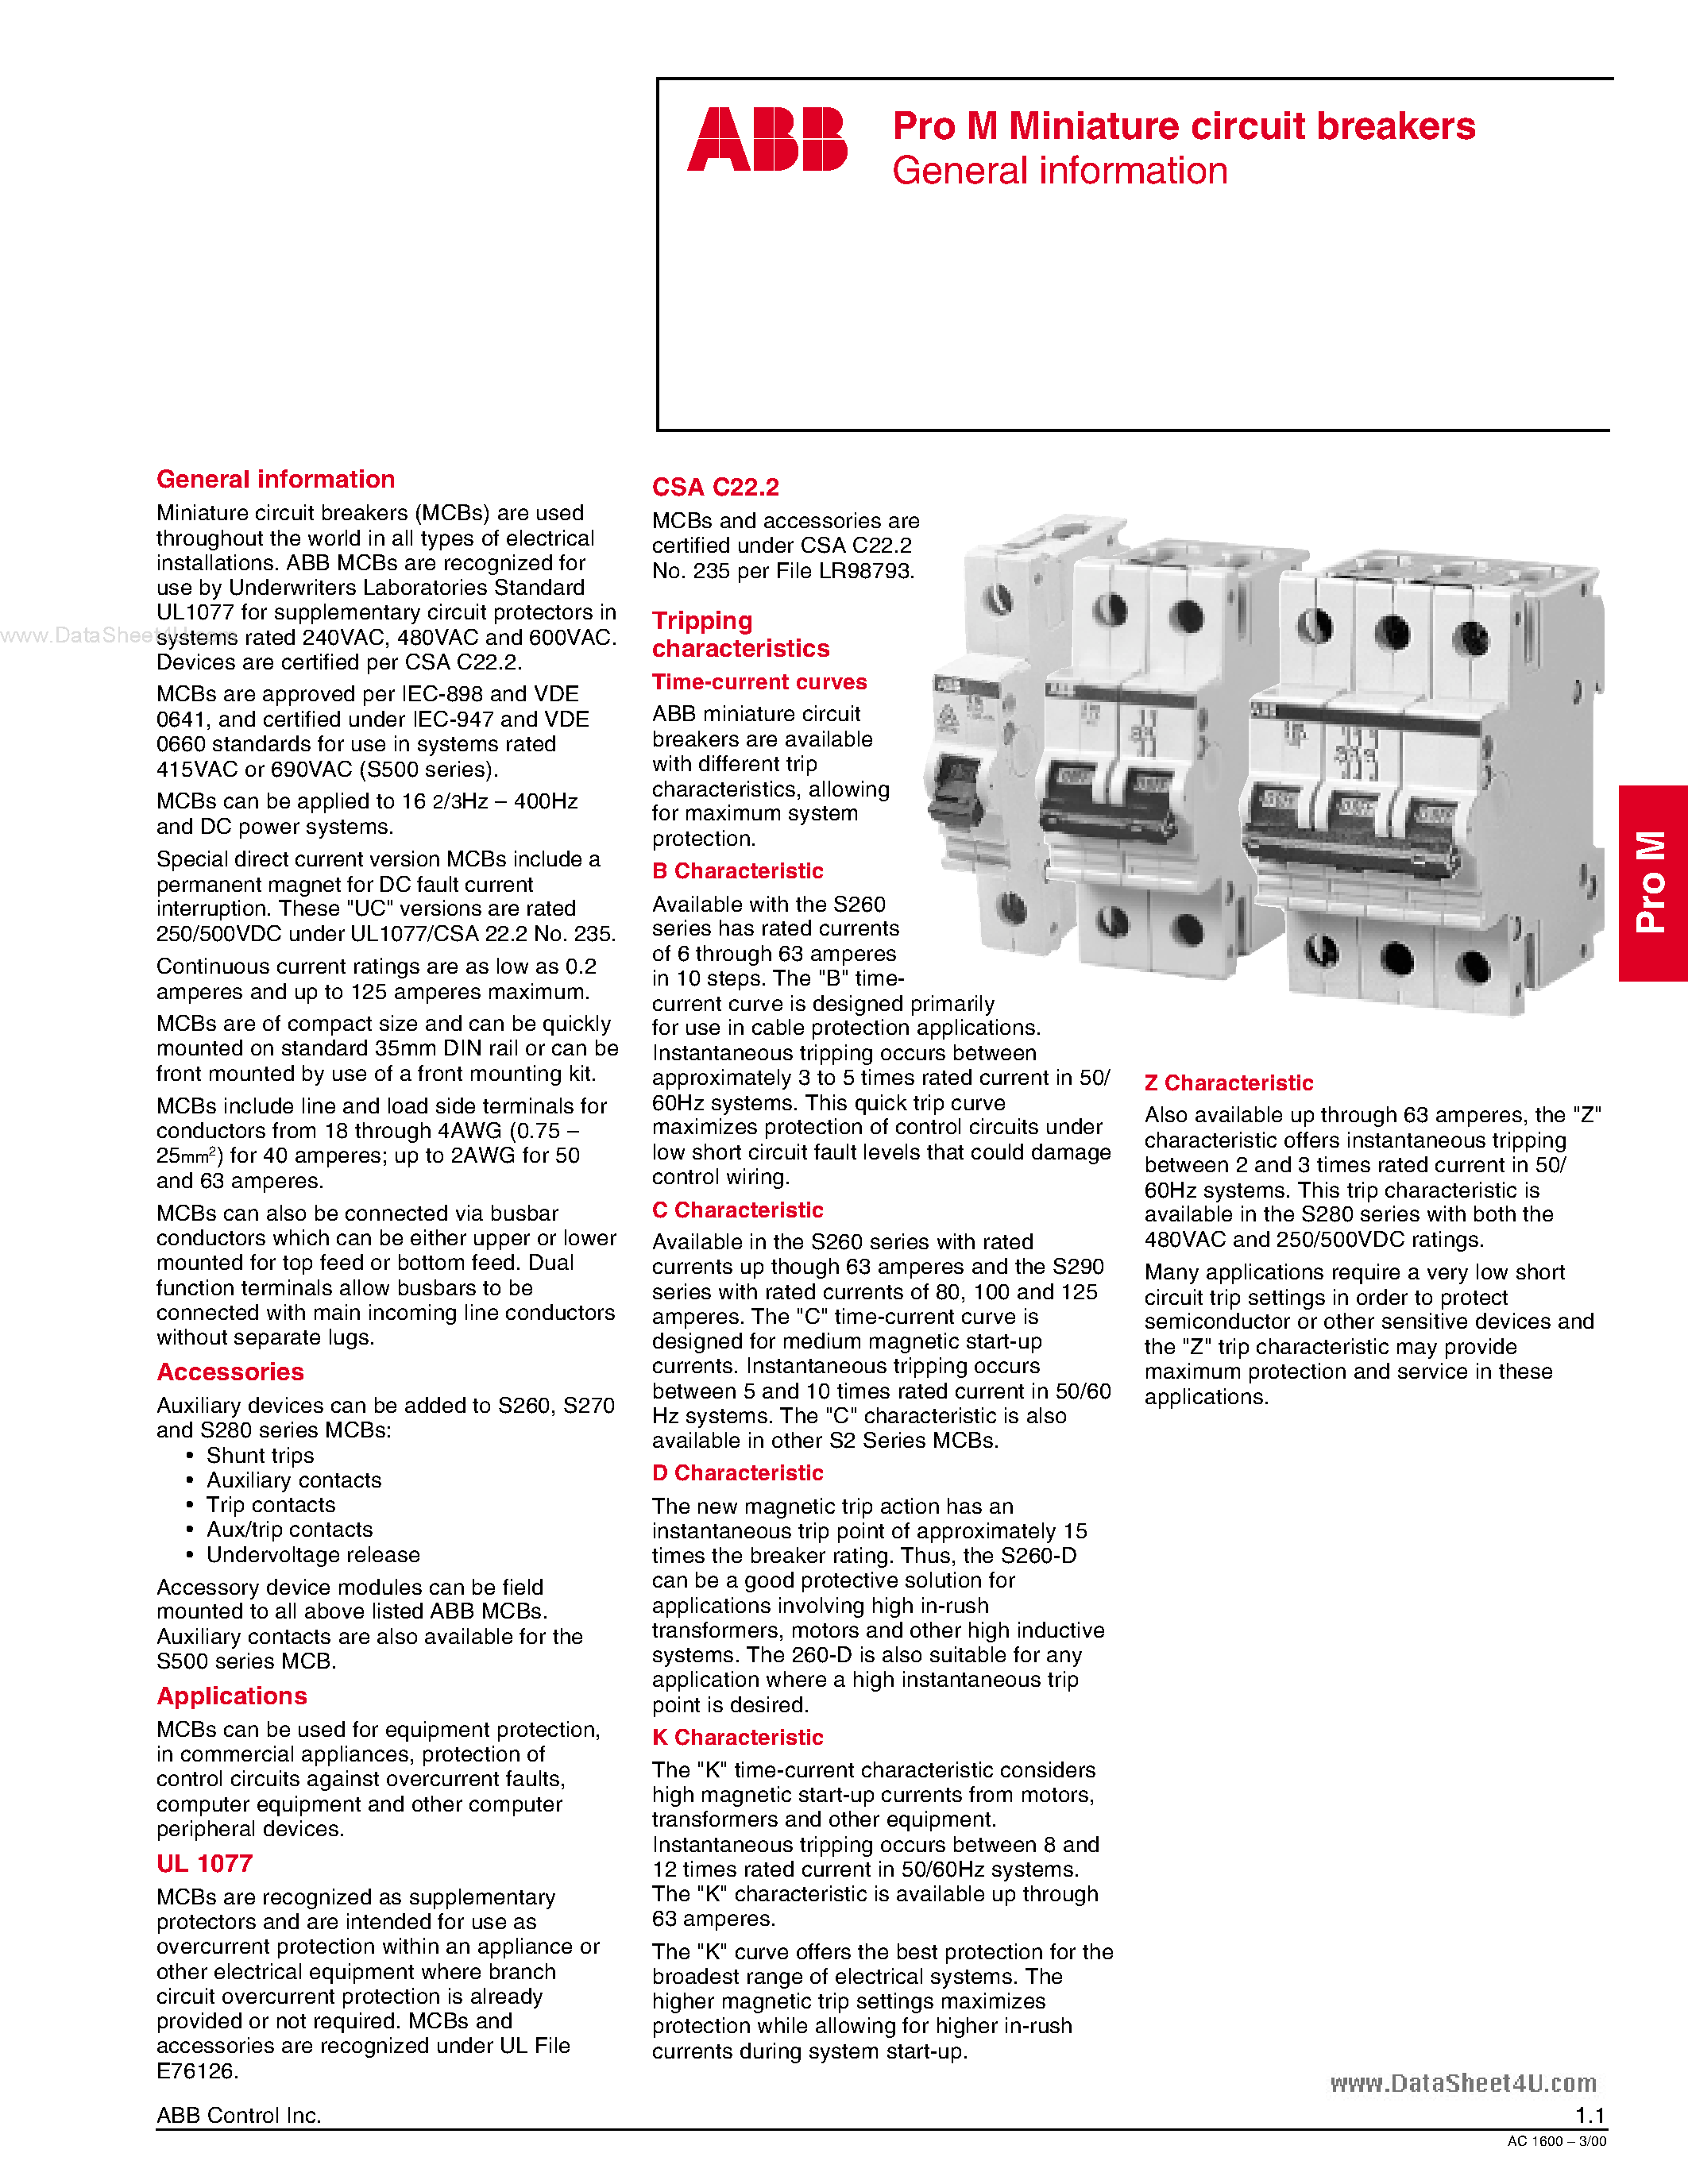 Datasheet S291-C125 - Pro M Miniature Circuit Breakers page 1